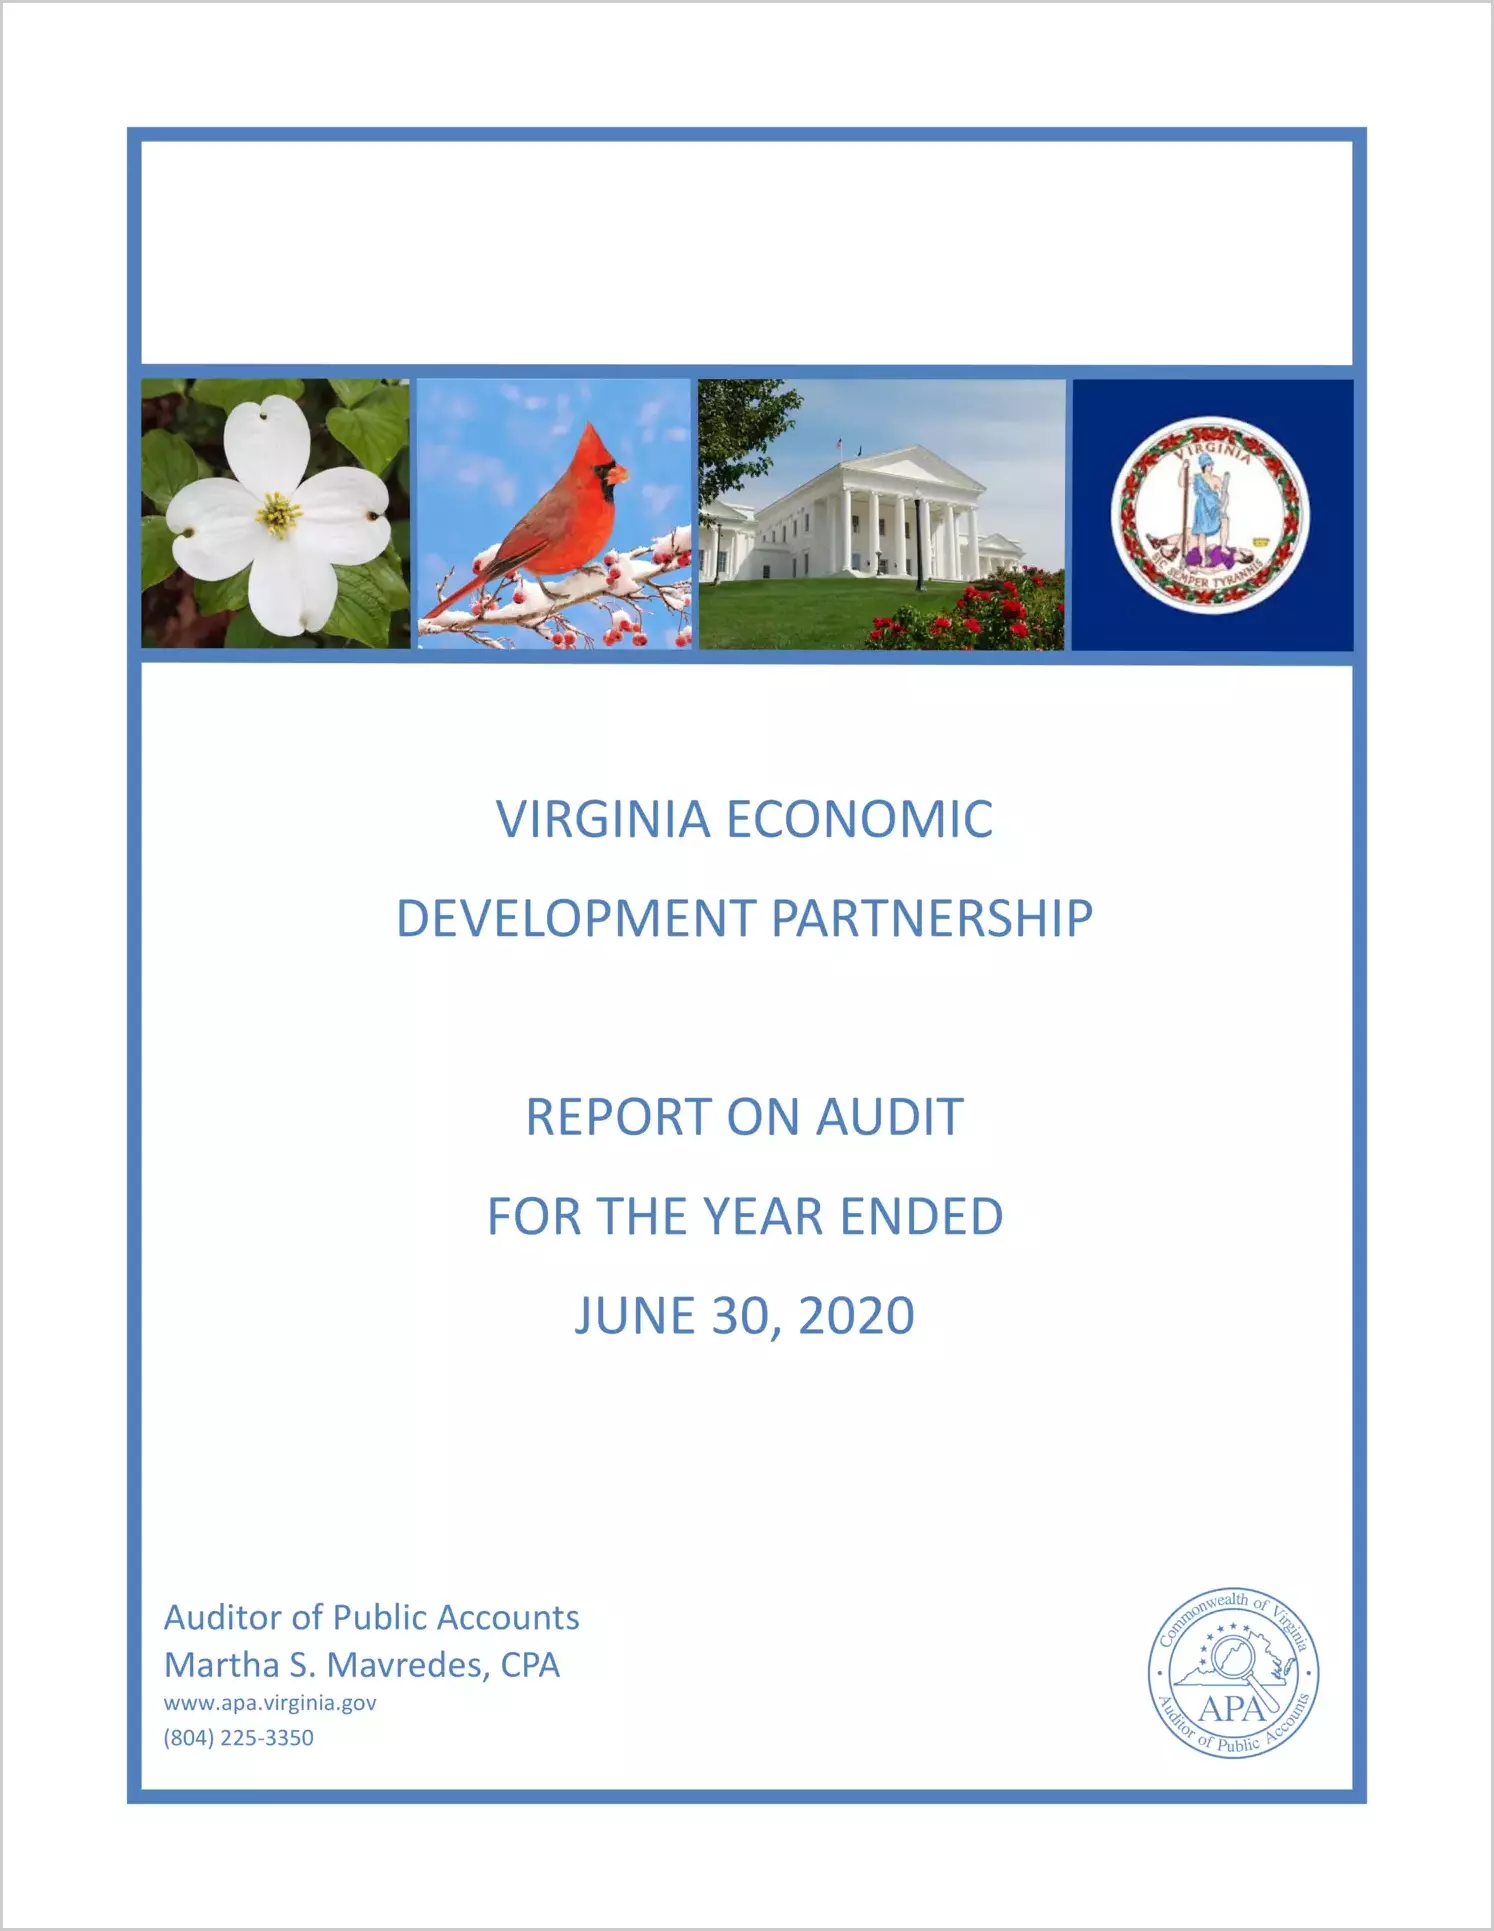 Virginia Economic Development Partnership for the year ended June 30, 2020